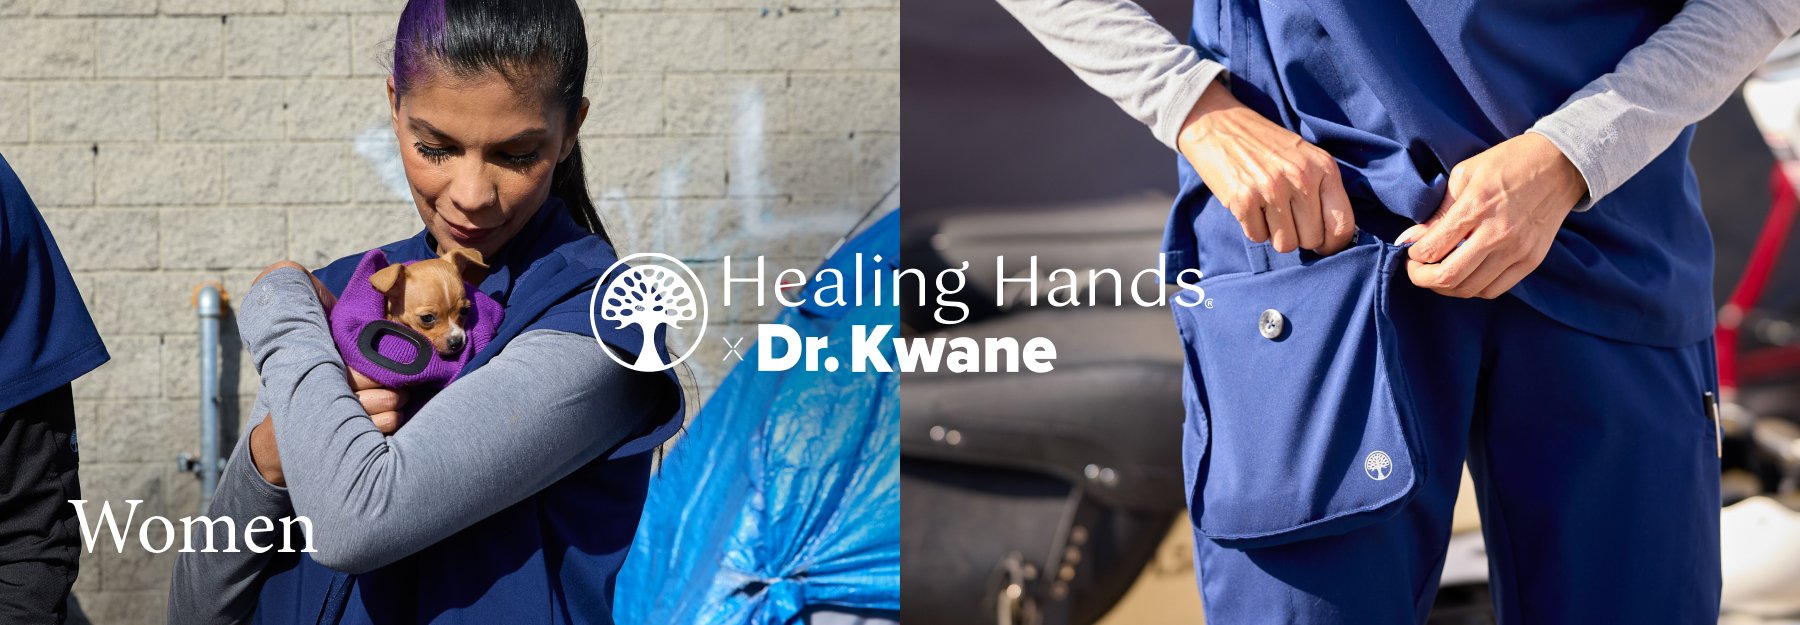 dr. kwane x healing hands women's scrubs